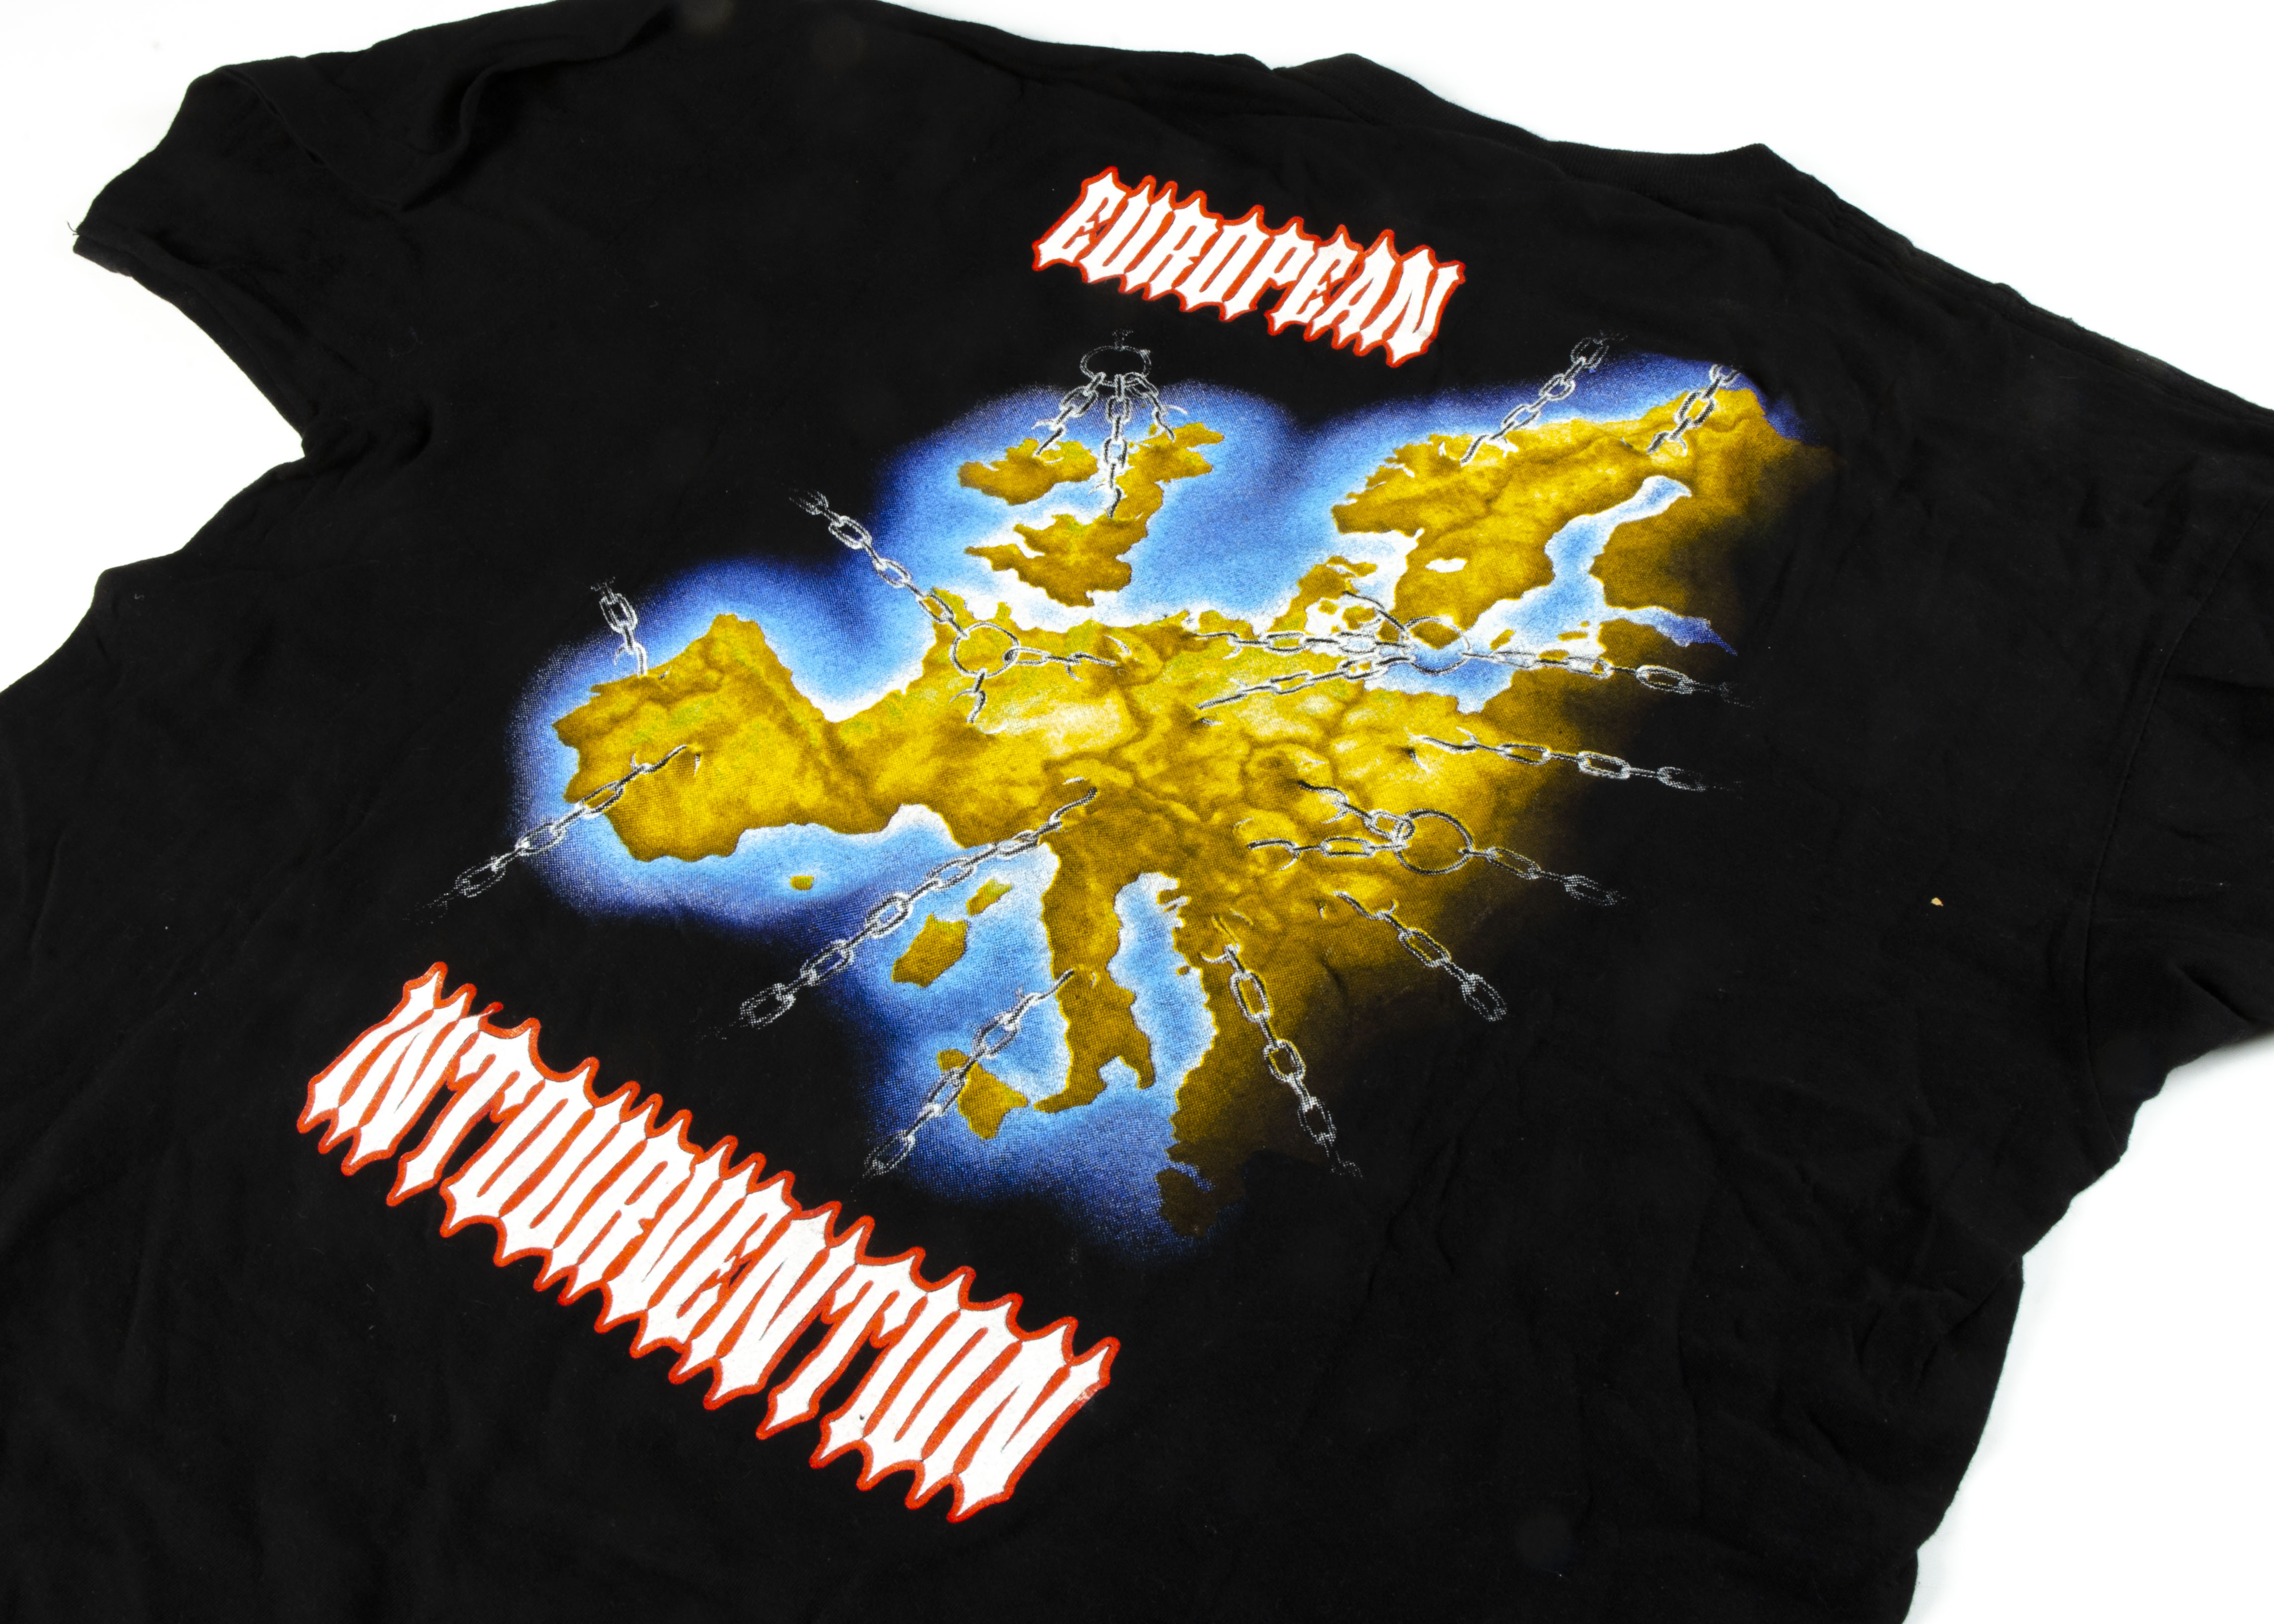 Slayer 'T' Shirt, European Intourvention 'T' Shirt 1994, World image on front and Europe image on - Image 2 of 2